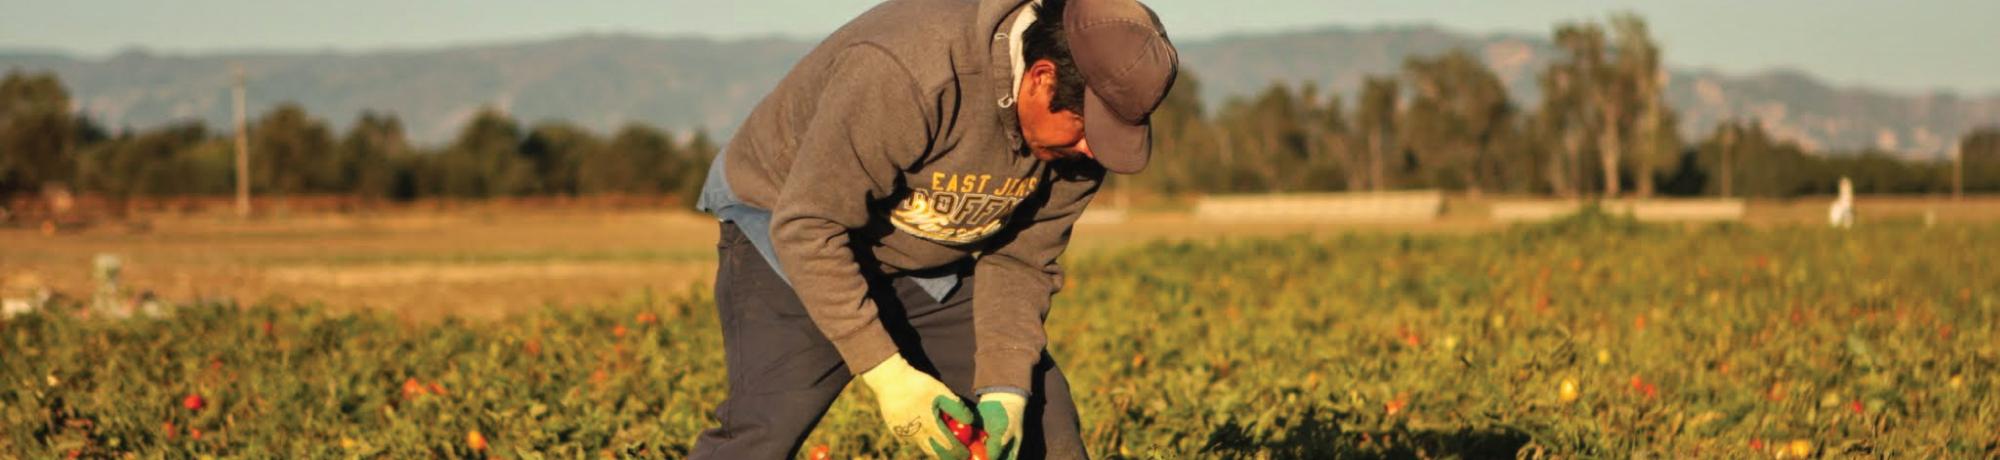 farmworker in a field of tomatoes